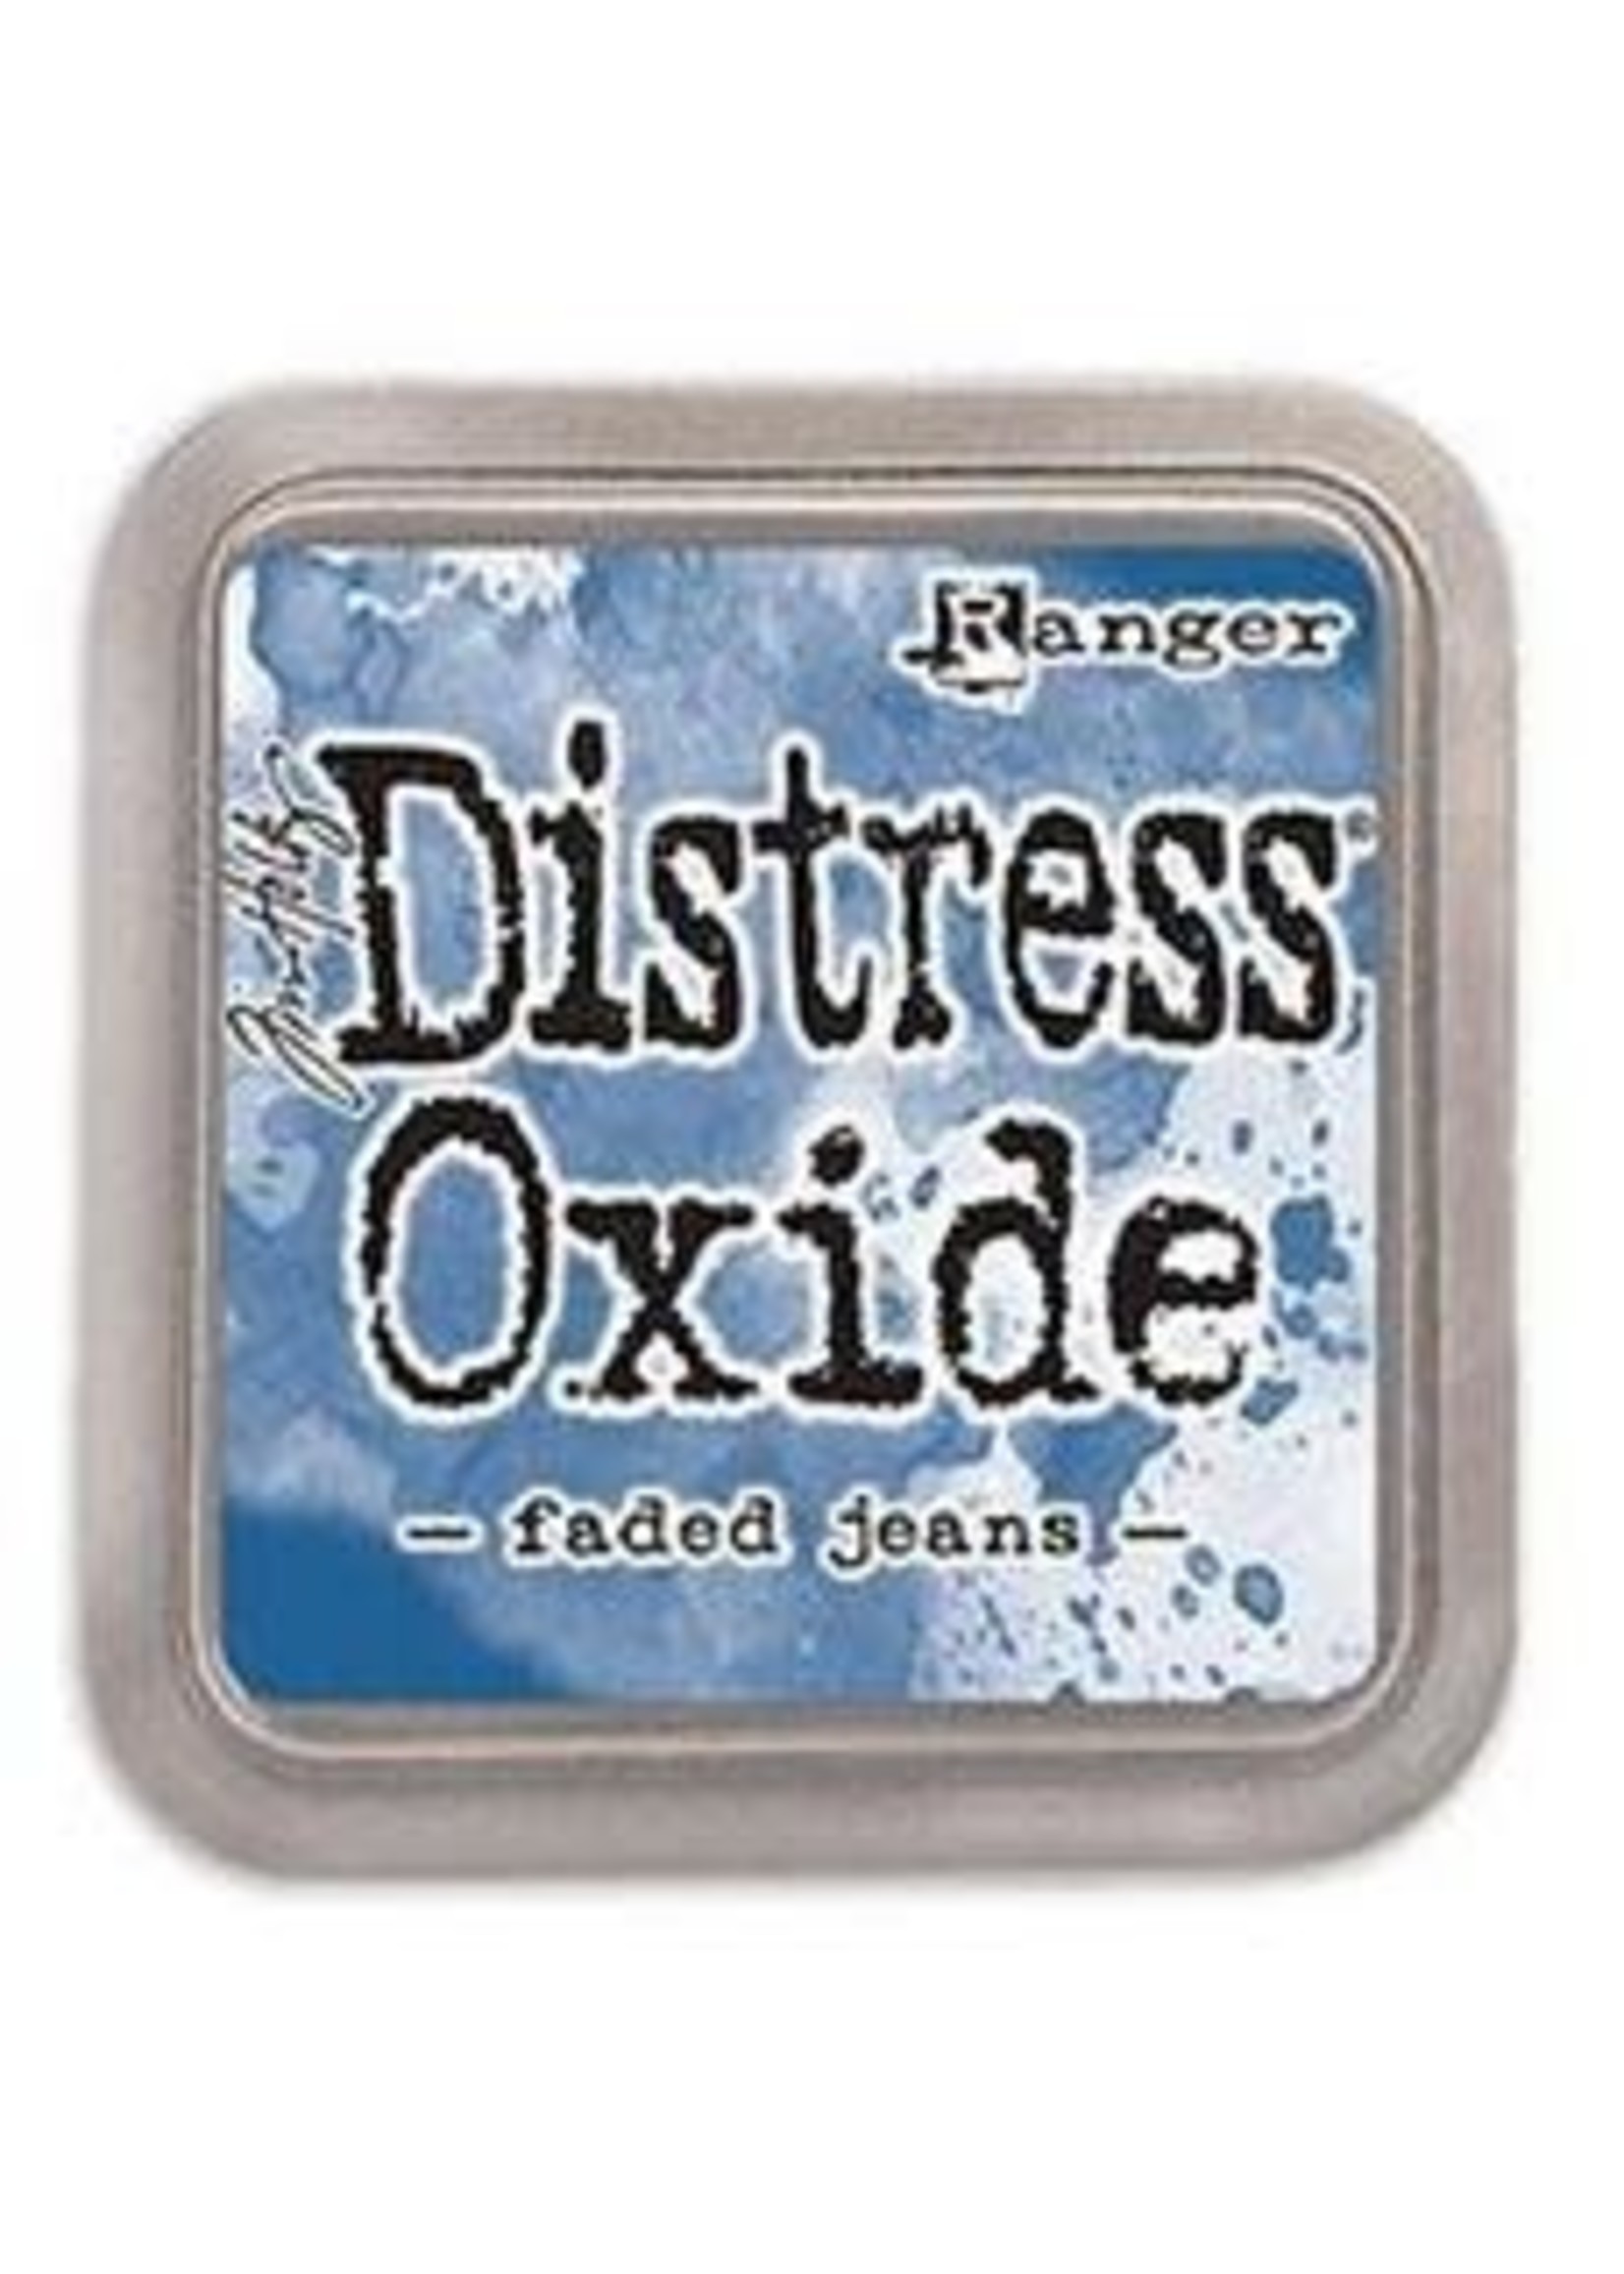 RANGER Distress Oxide Faded Jeans